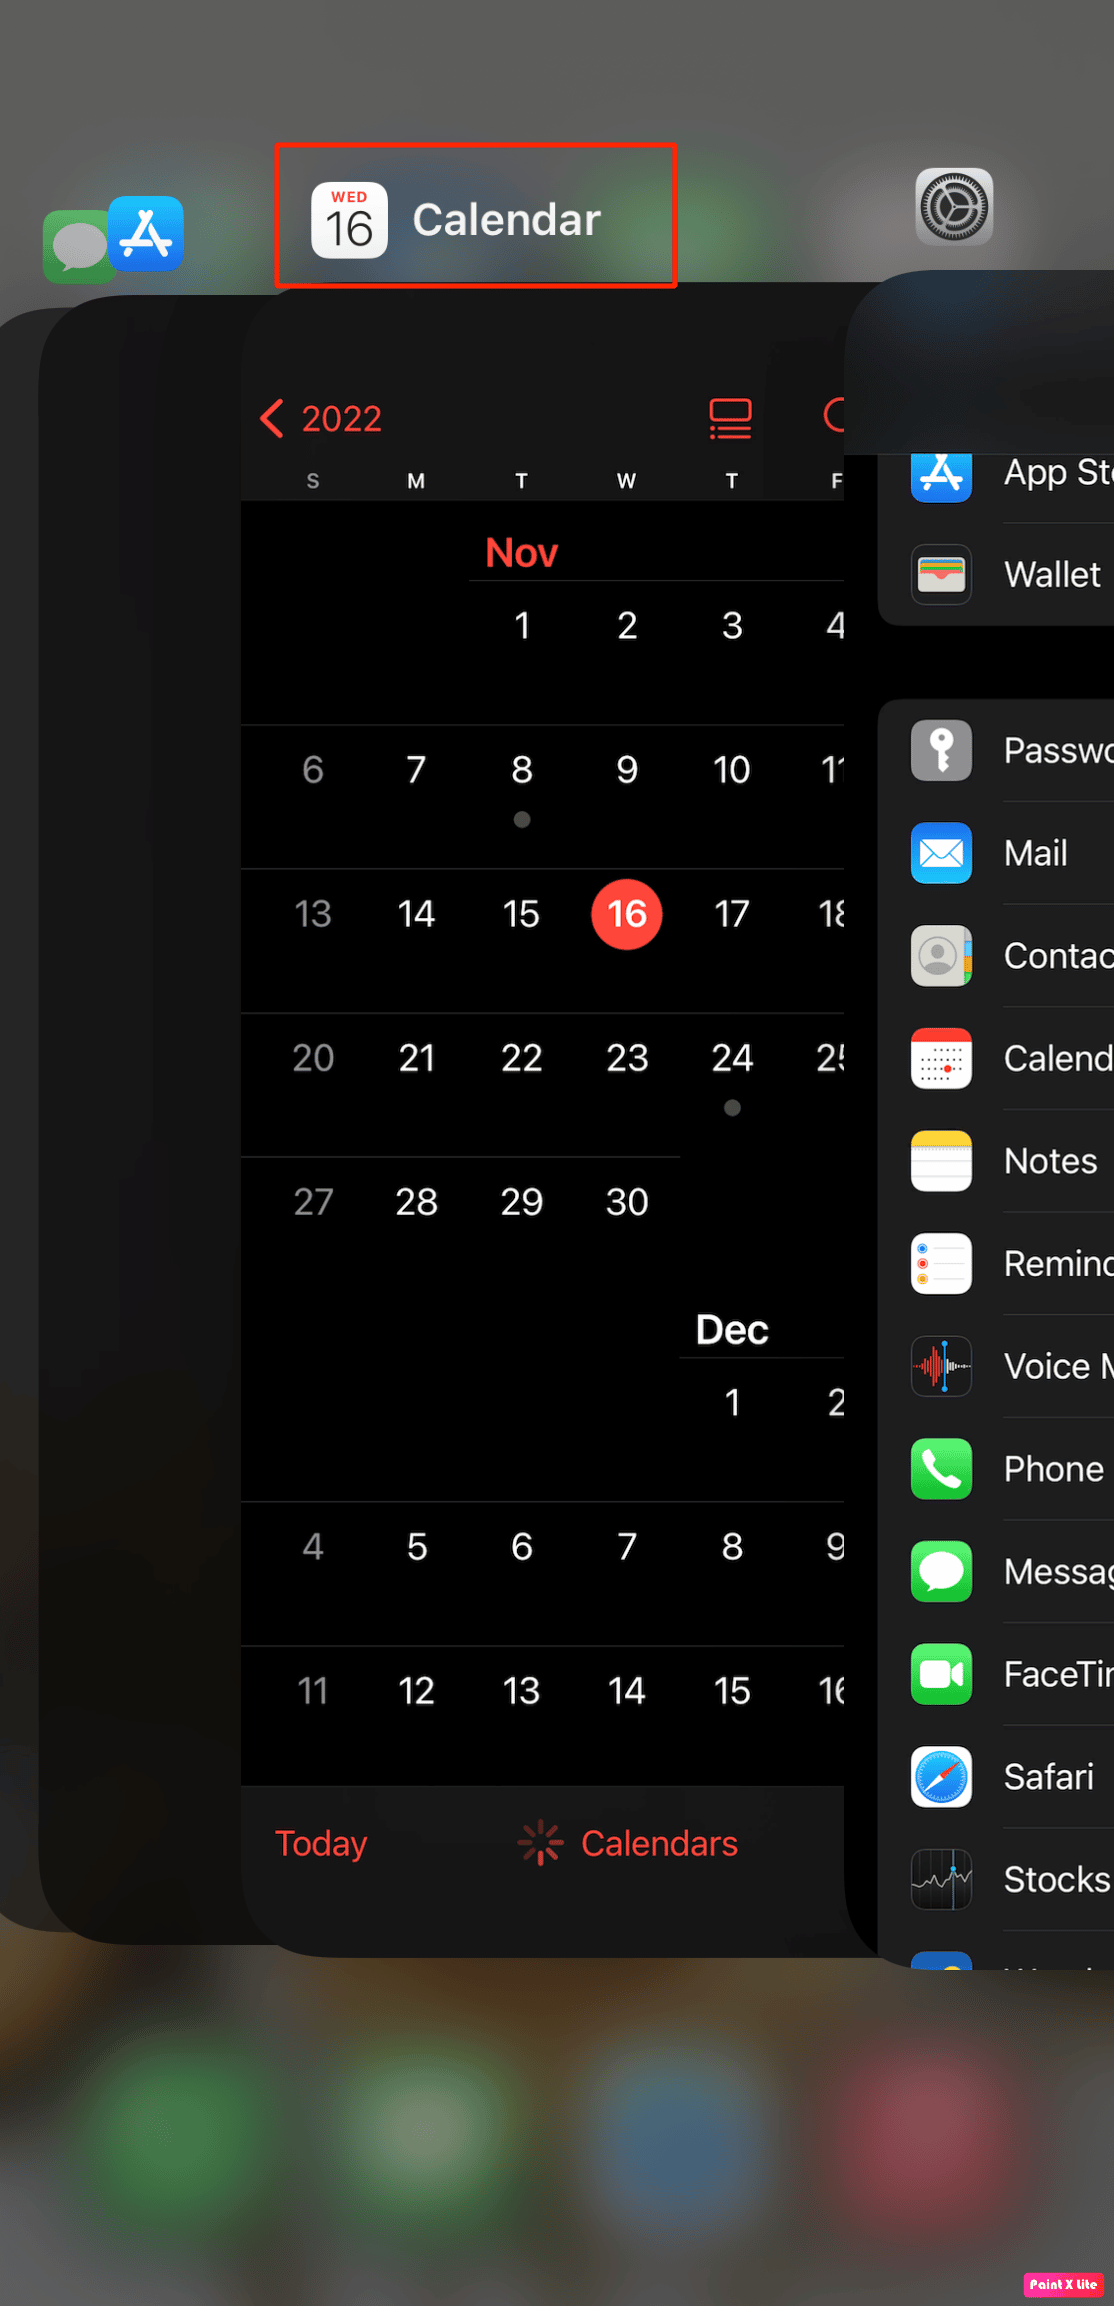 swipe up to close calendar app